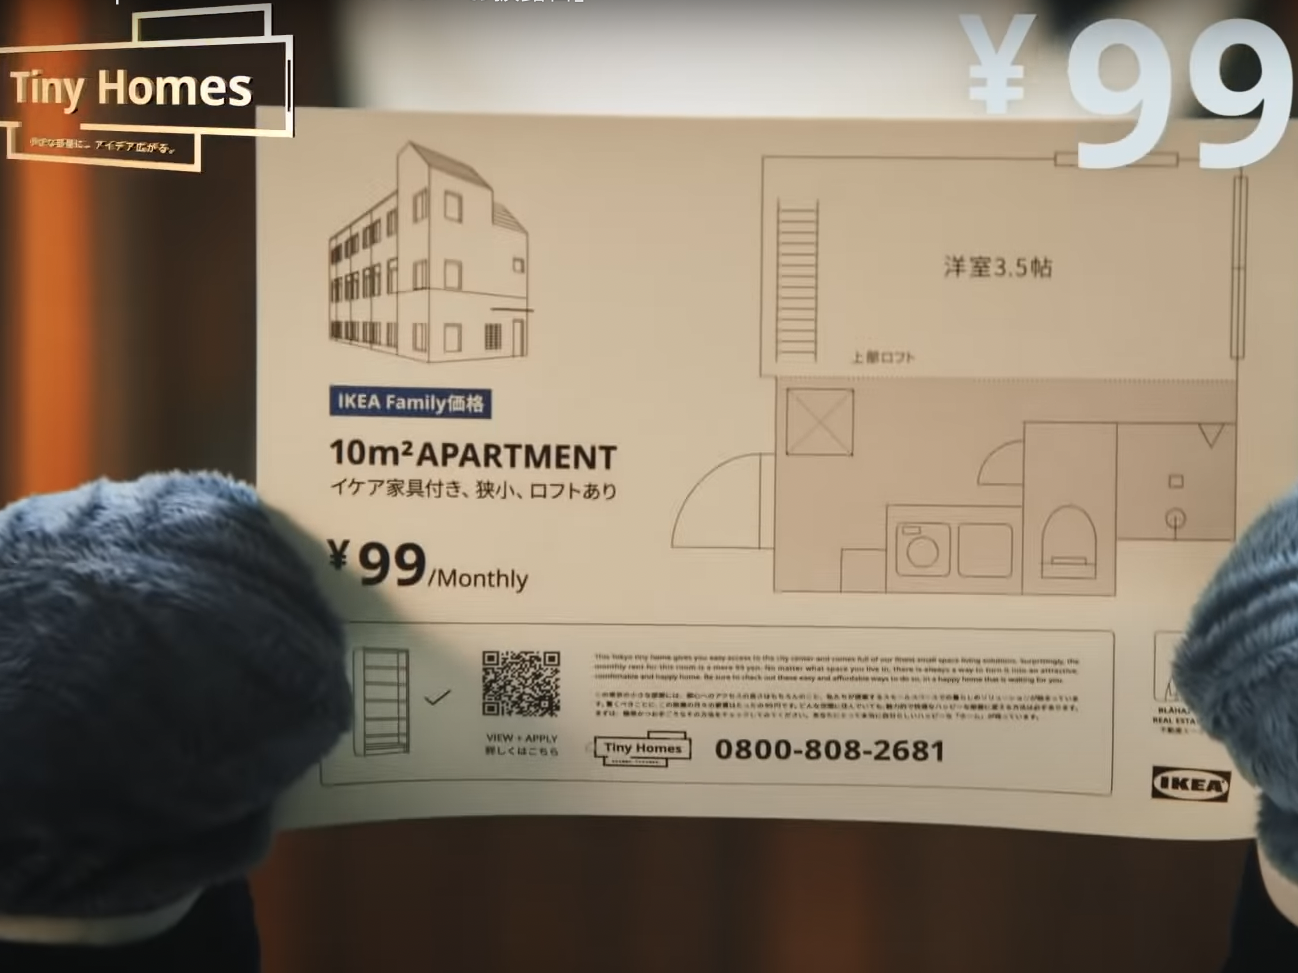 An image of Ikea's tiny homes apartment floorplan